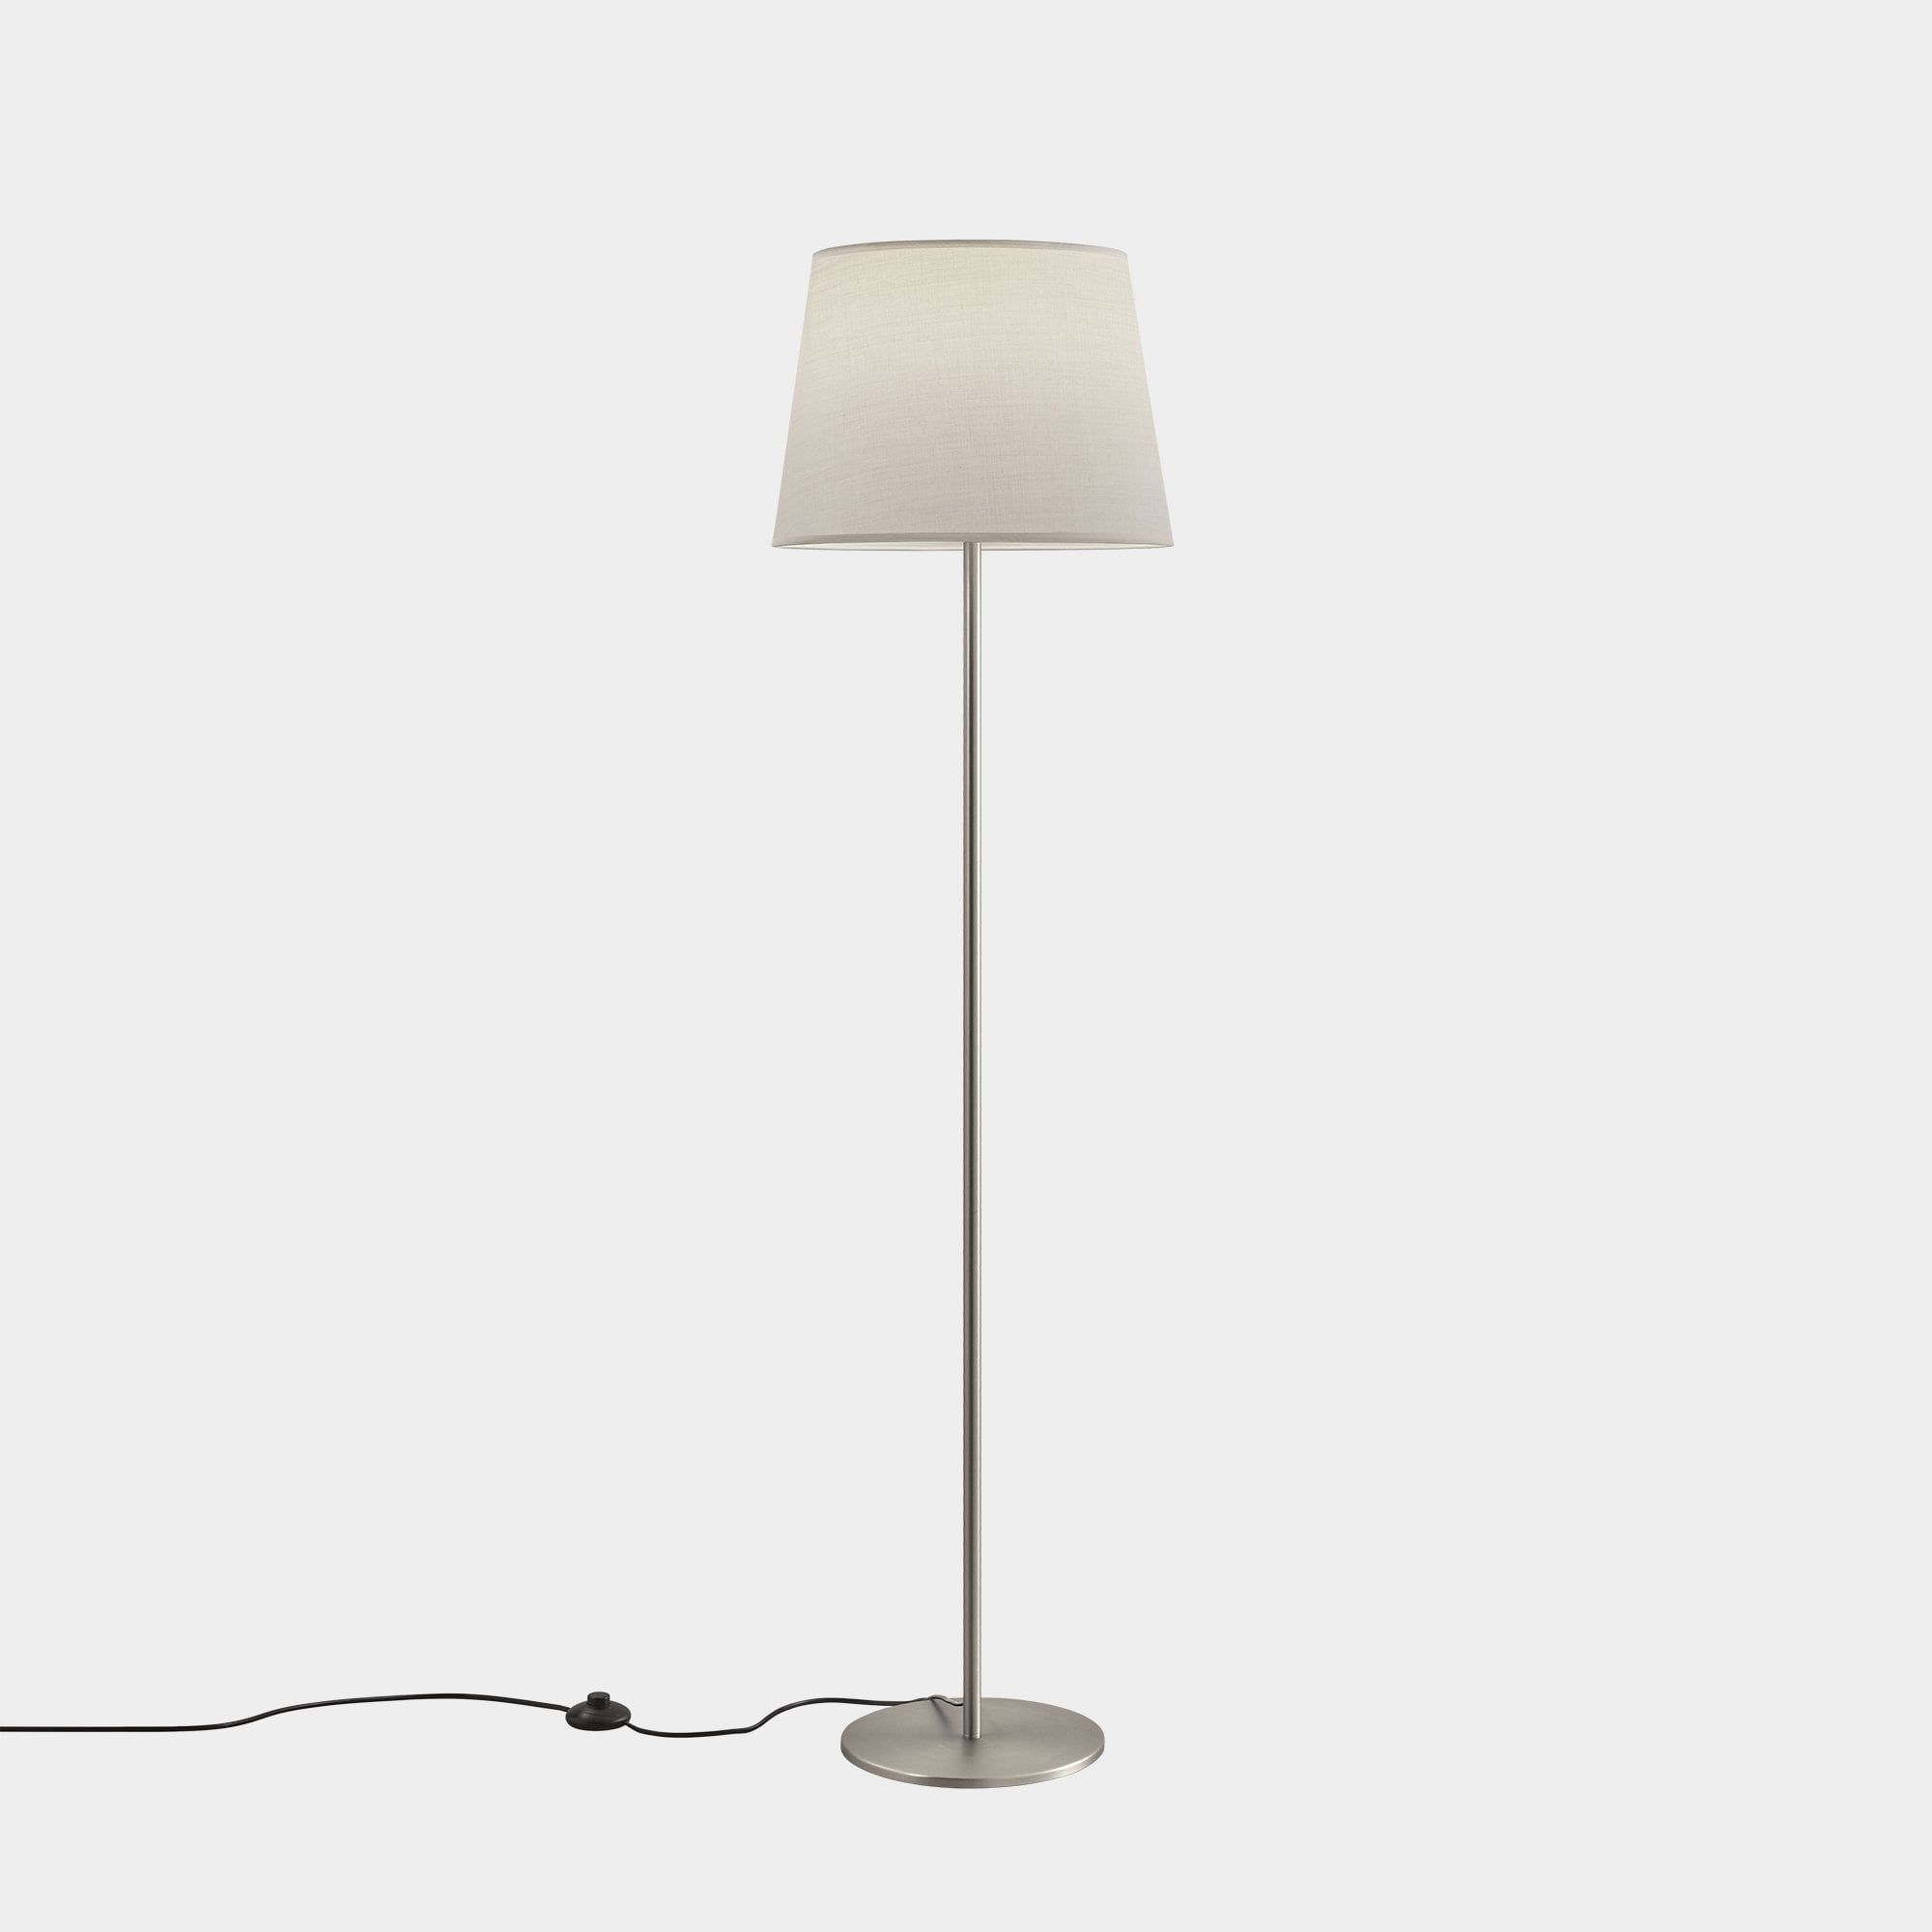 Modern Simply Styled Floor Lamp Satin Nickel | Lighting Company Uk Pertaining To Brushed Nickel Floor Lamps (View 10 of 15)